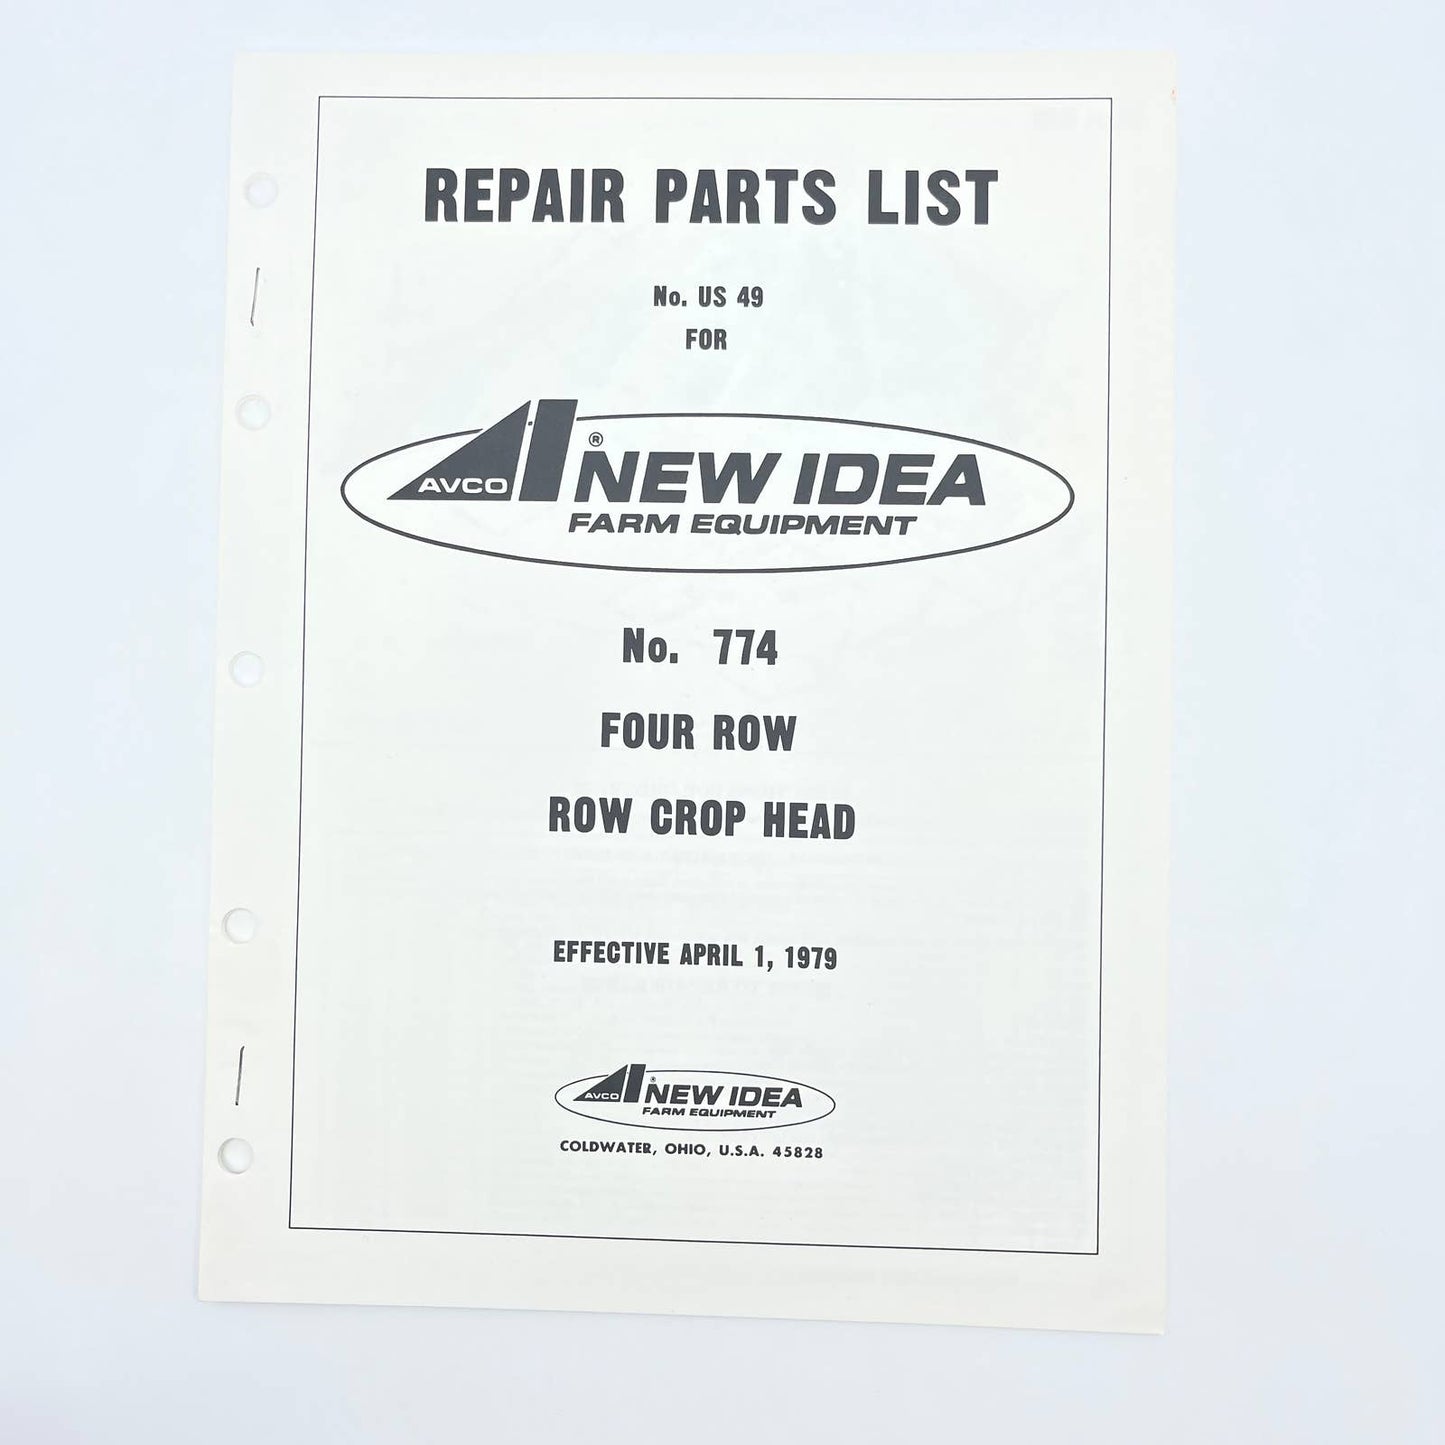 Original 1979 New Idea Repair Parts List US 49 774 Four Row Row Crop Head TB9